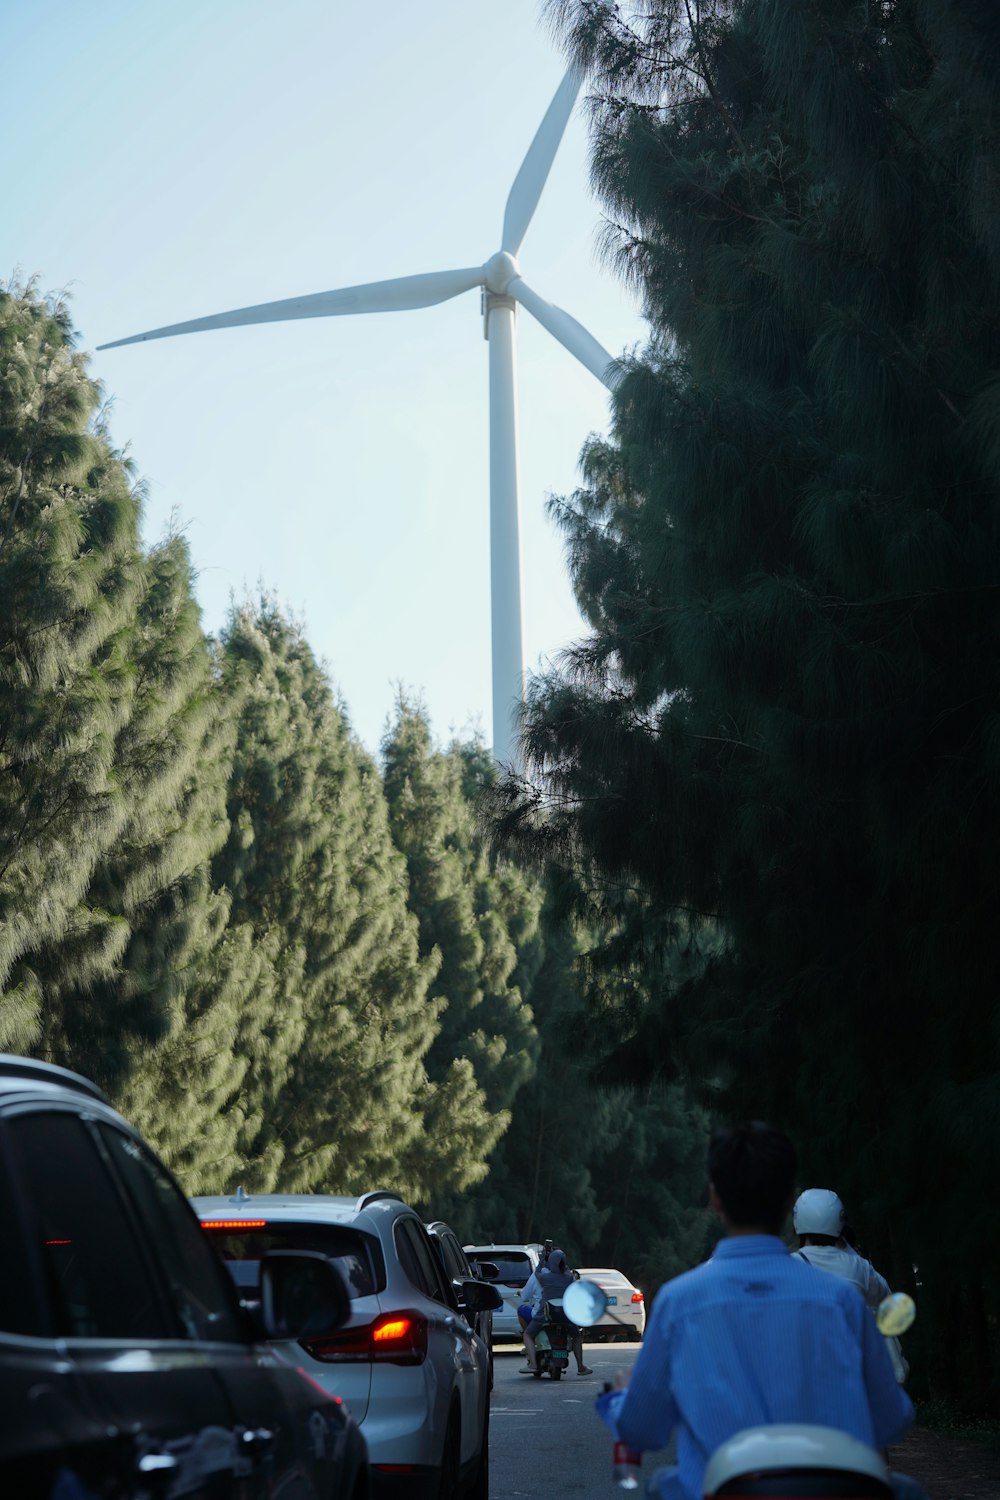 a man riding a bike down a street next to a wind turbine